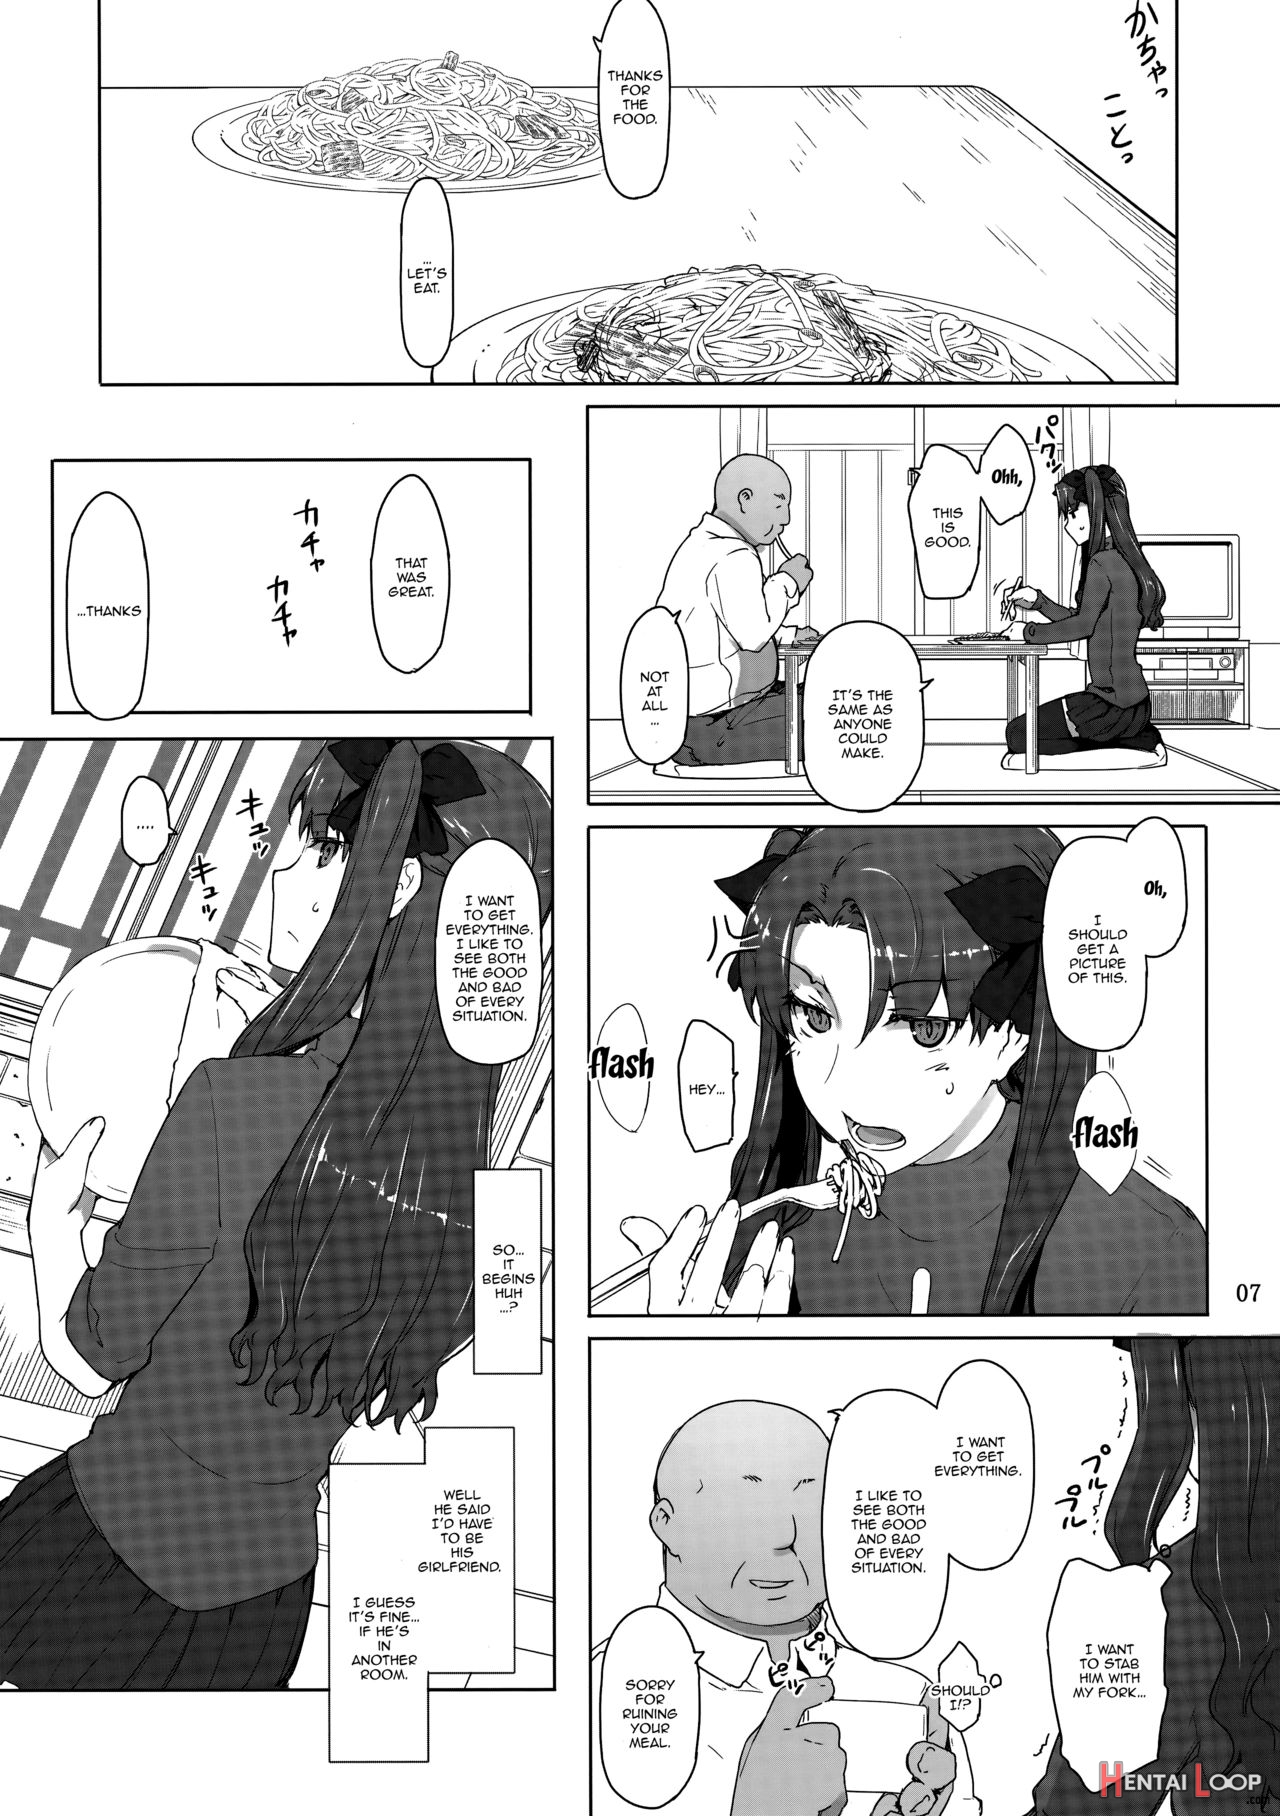 Tohsaka-ke No Kakei Jijou 10 page 6